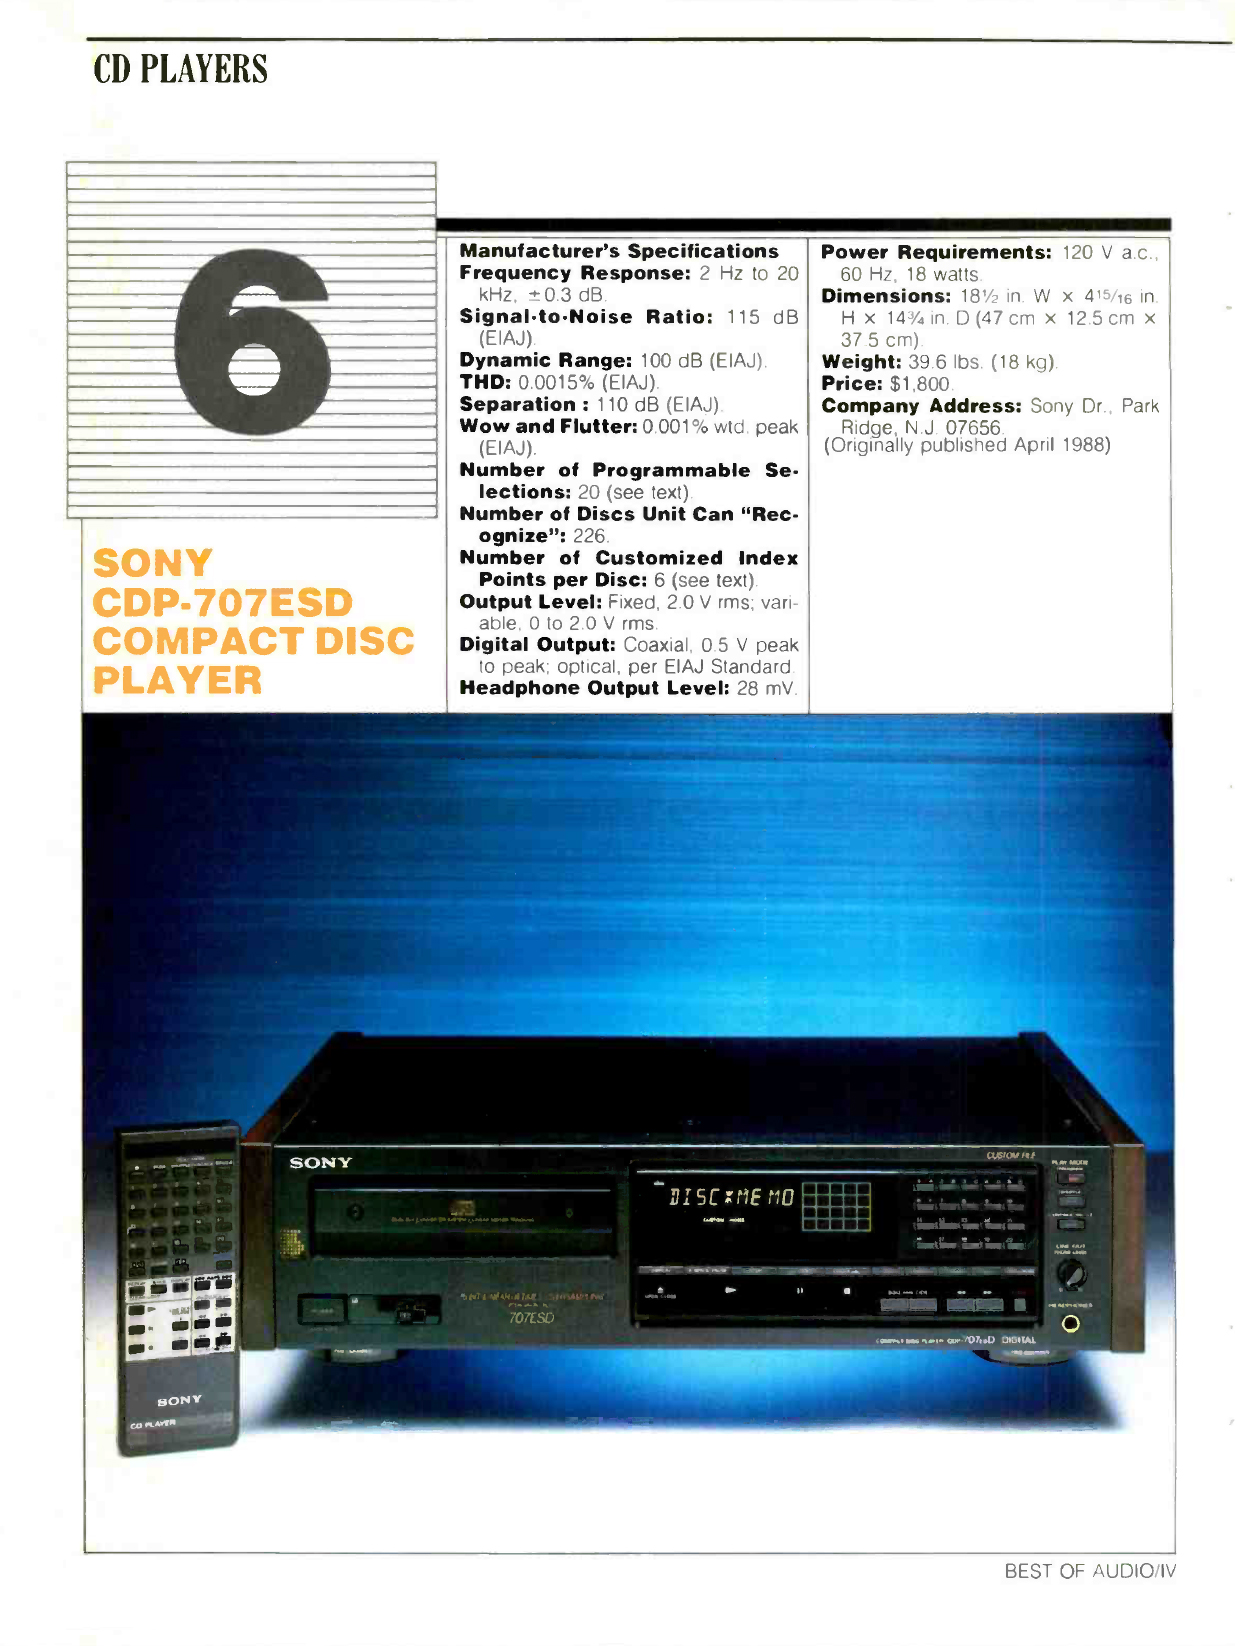 Sony CDP-707 ESD-Test-1988.jpg